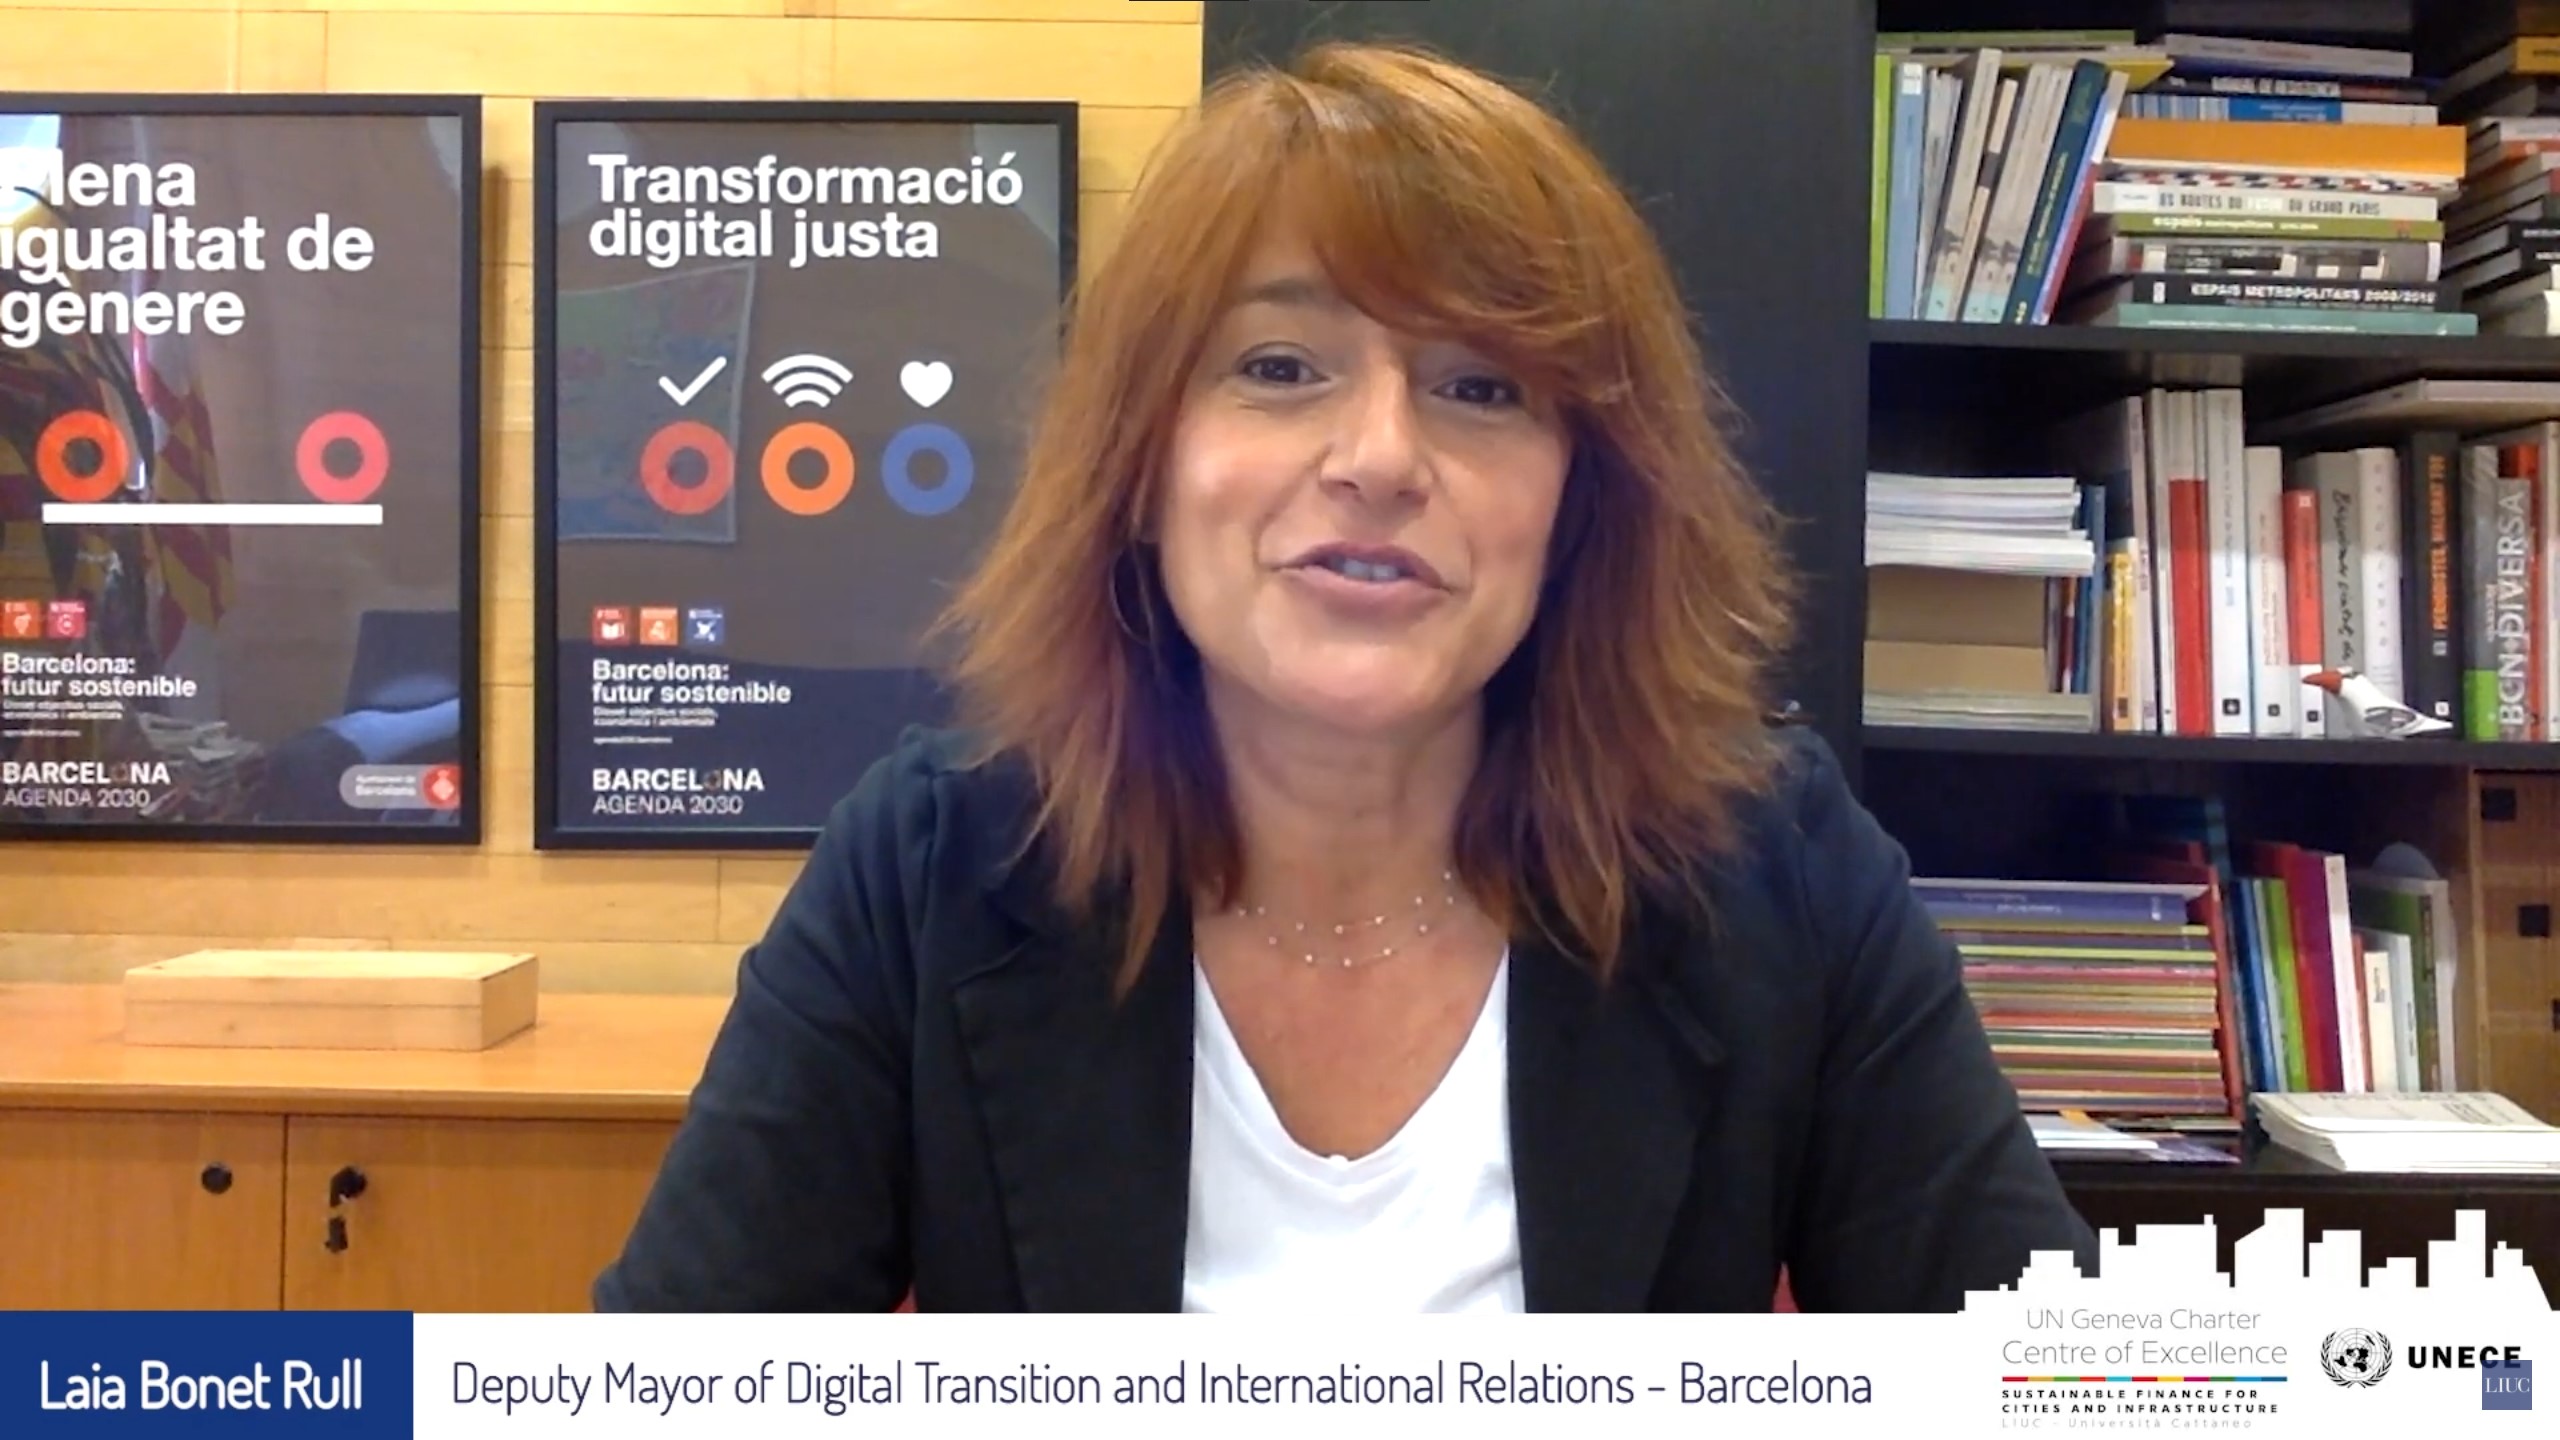 Laia Bonet Rull, Deputy Mayor of Digital Transition and International Relations – Barcelona